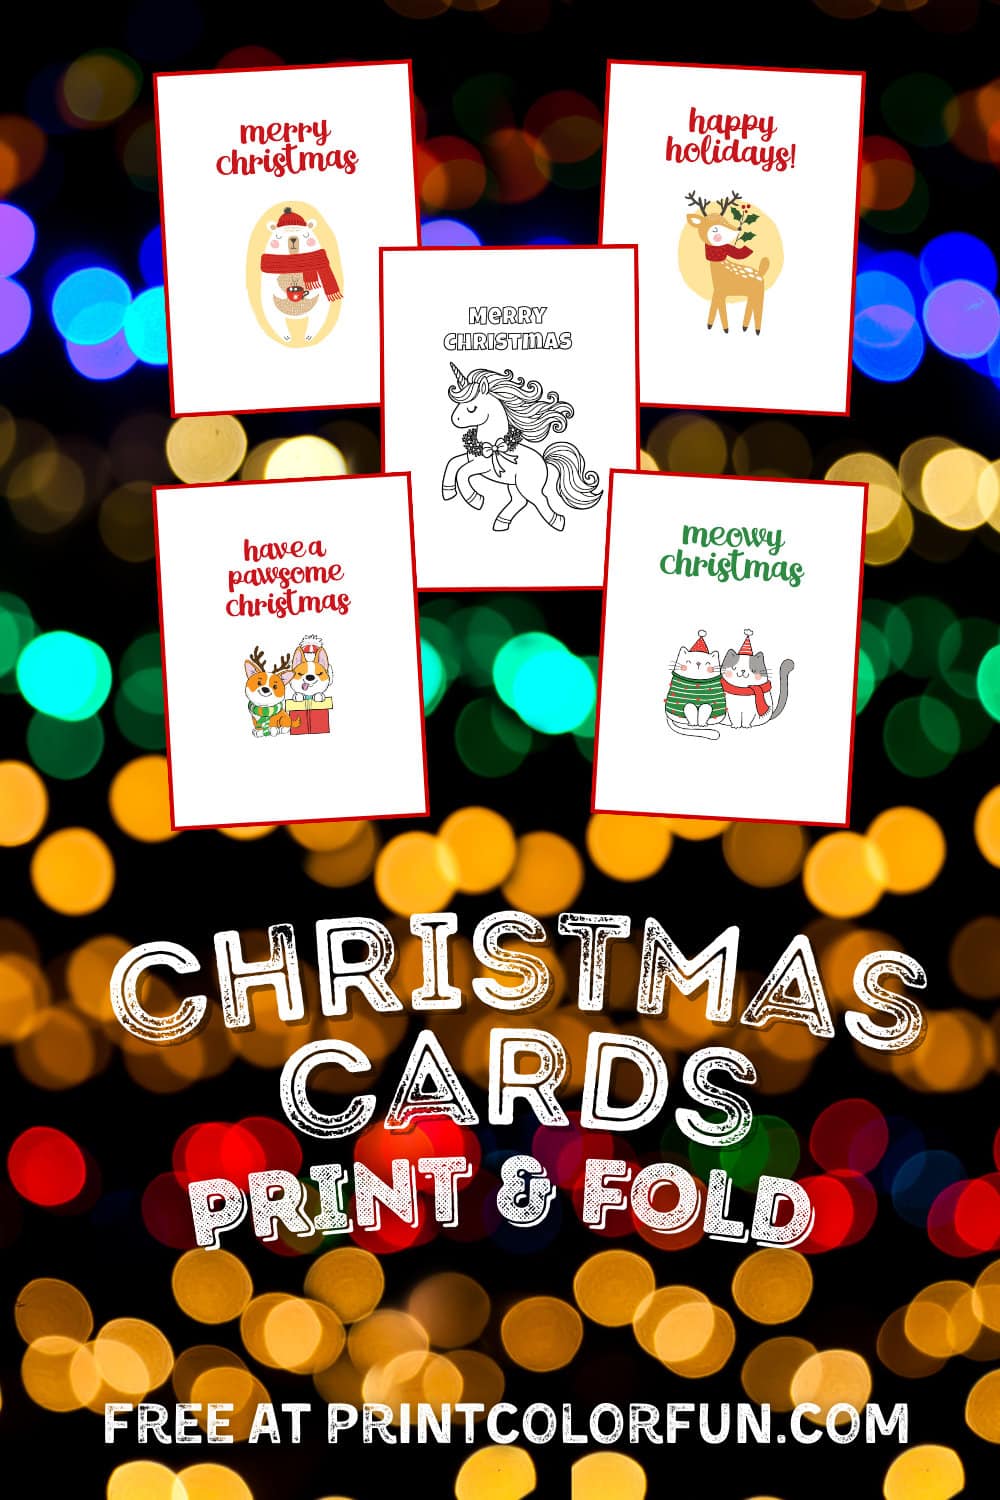 Free printable Christmas cards to download at PrintColorFun com